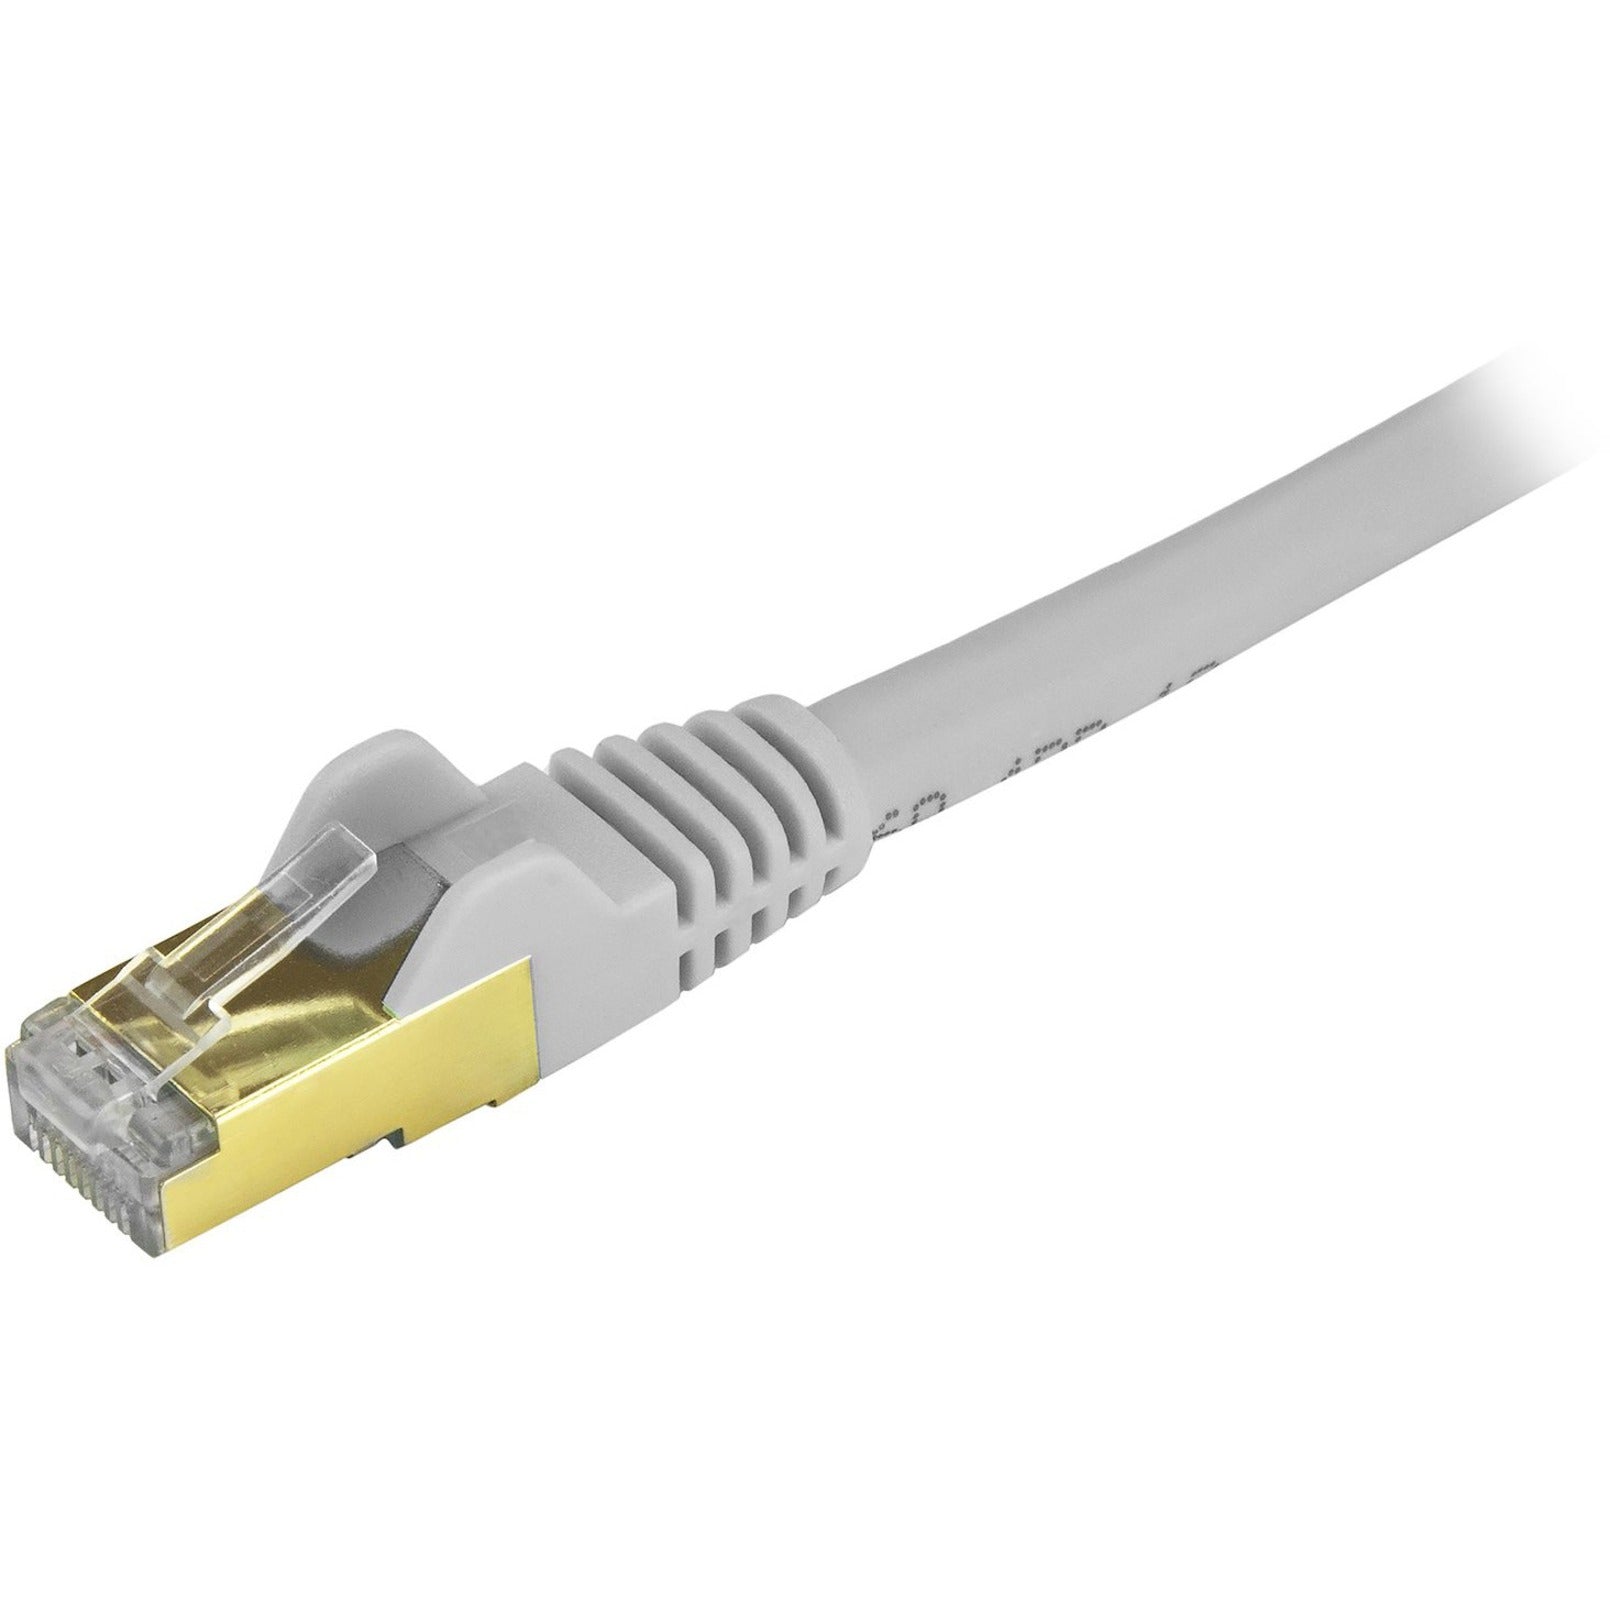 StarTech.com C6ASPAT6INGR Cat6a Ethernet Patch Cable - Shielded (STP) - 6 in. Gray Short Ethernet Cord